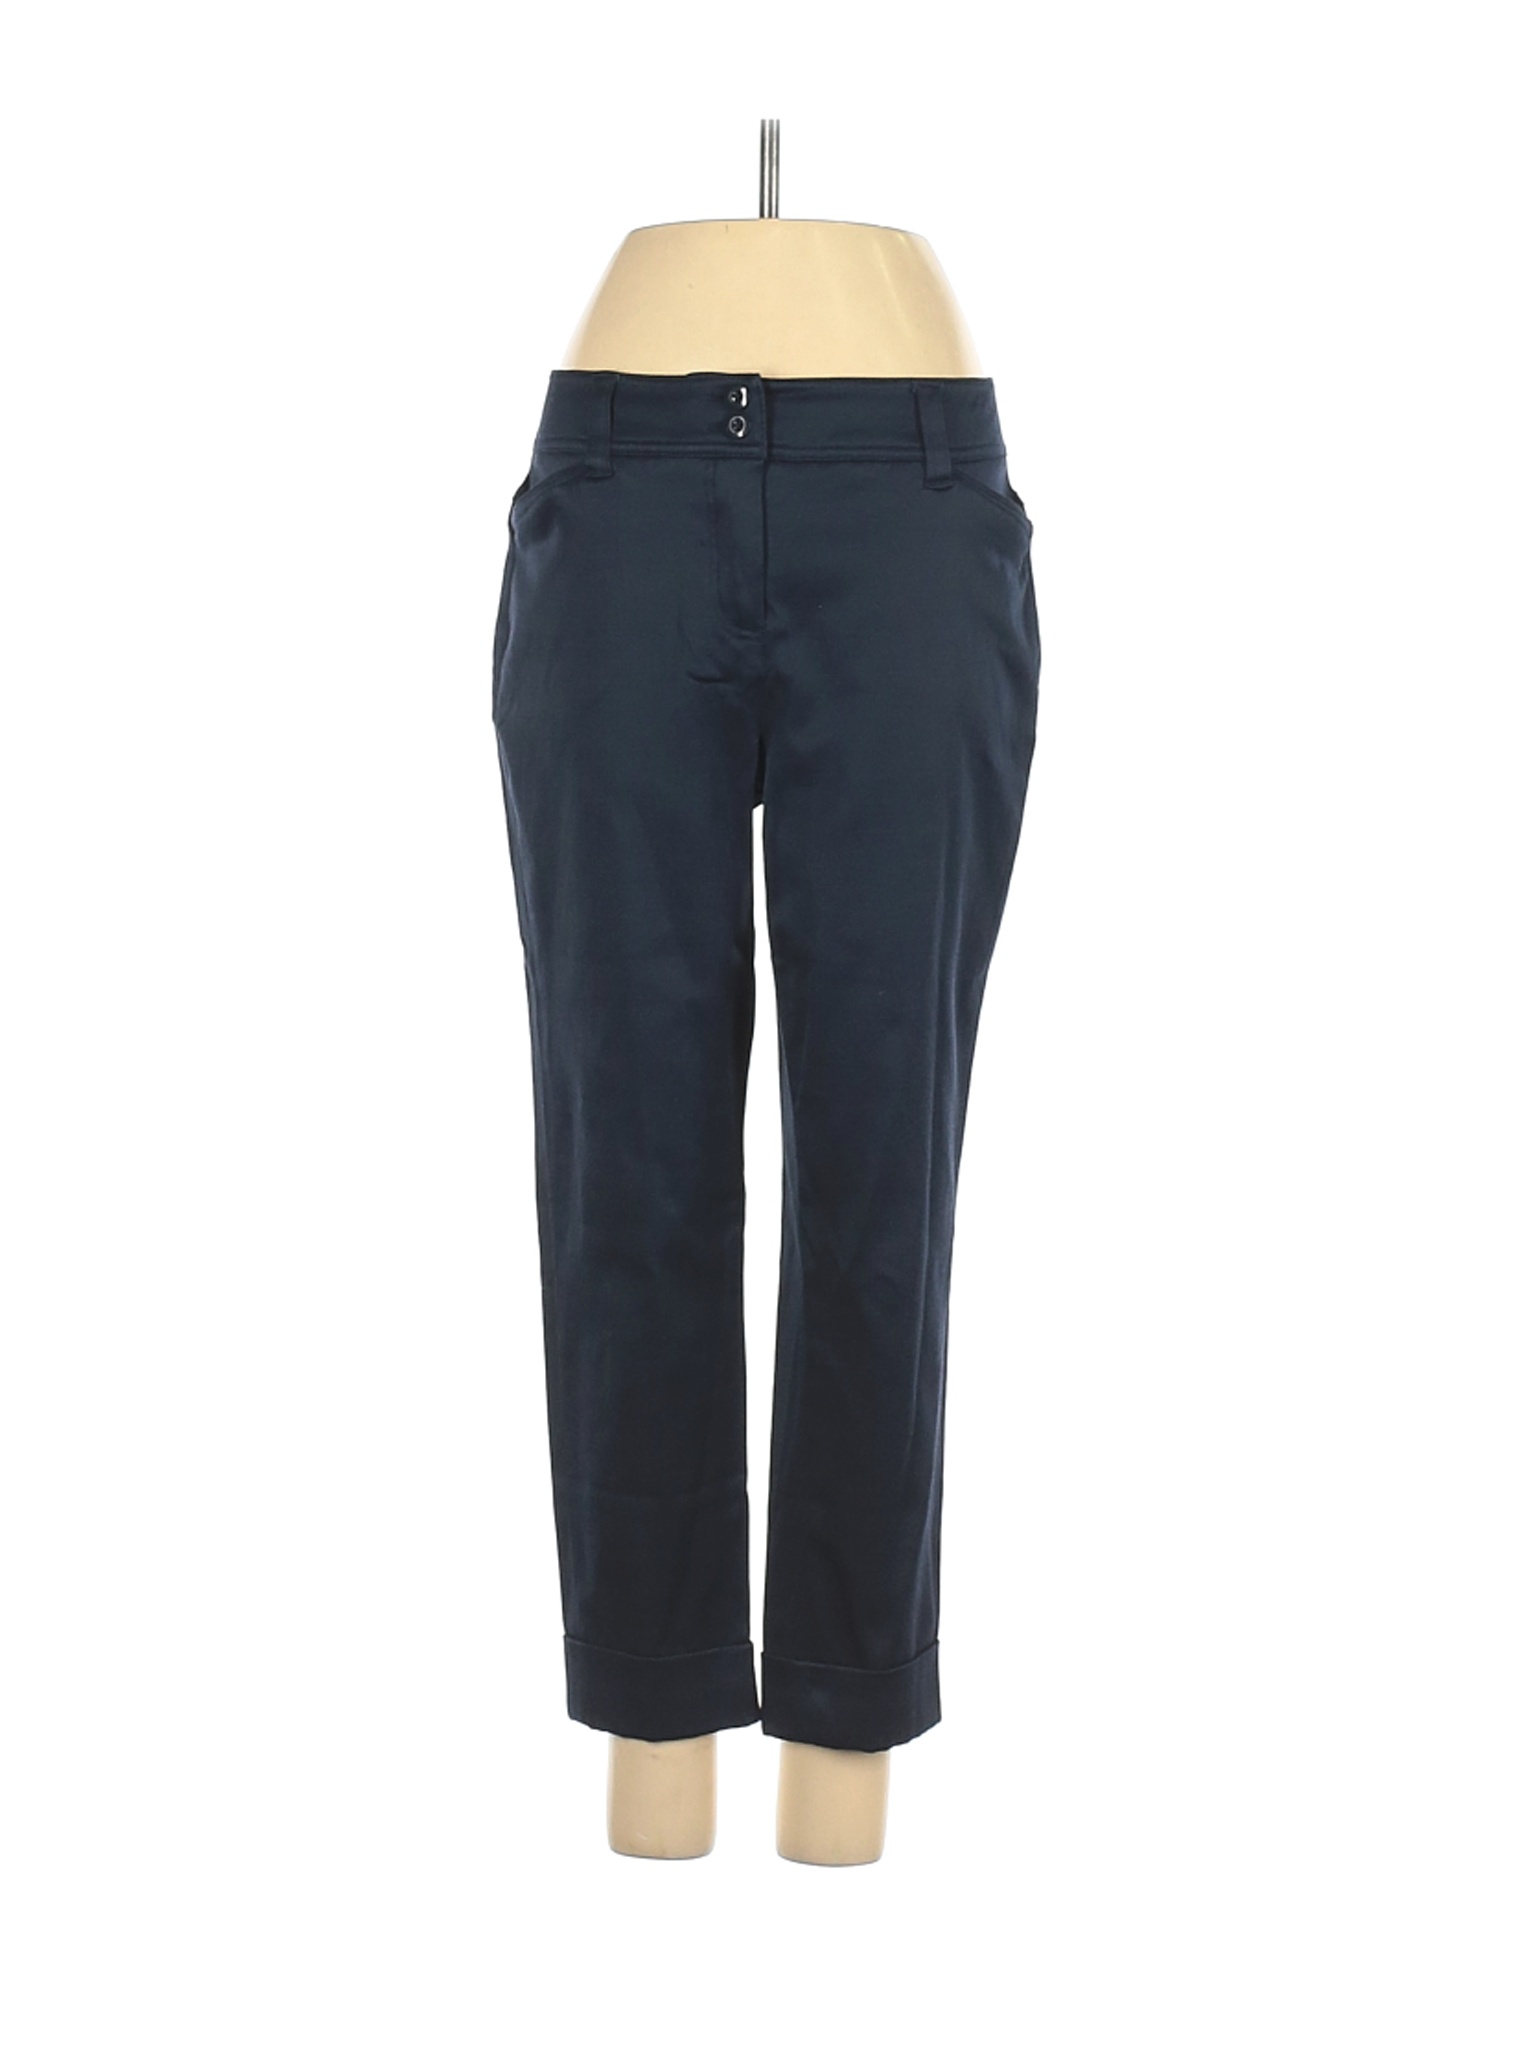 Cato Women Blue Casual Pants 4 | eBay